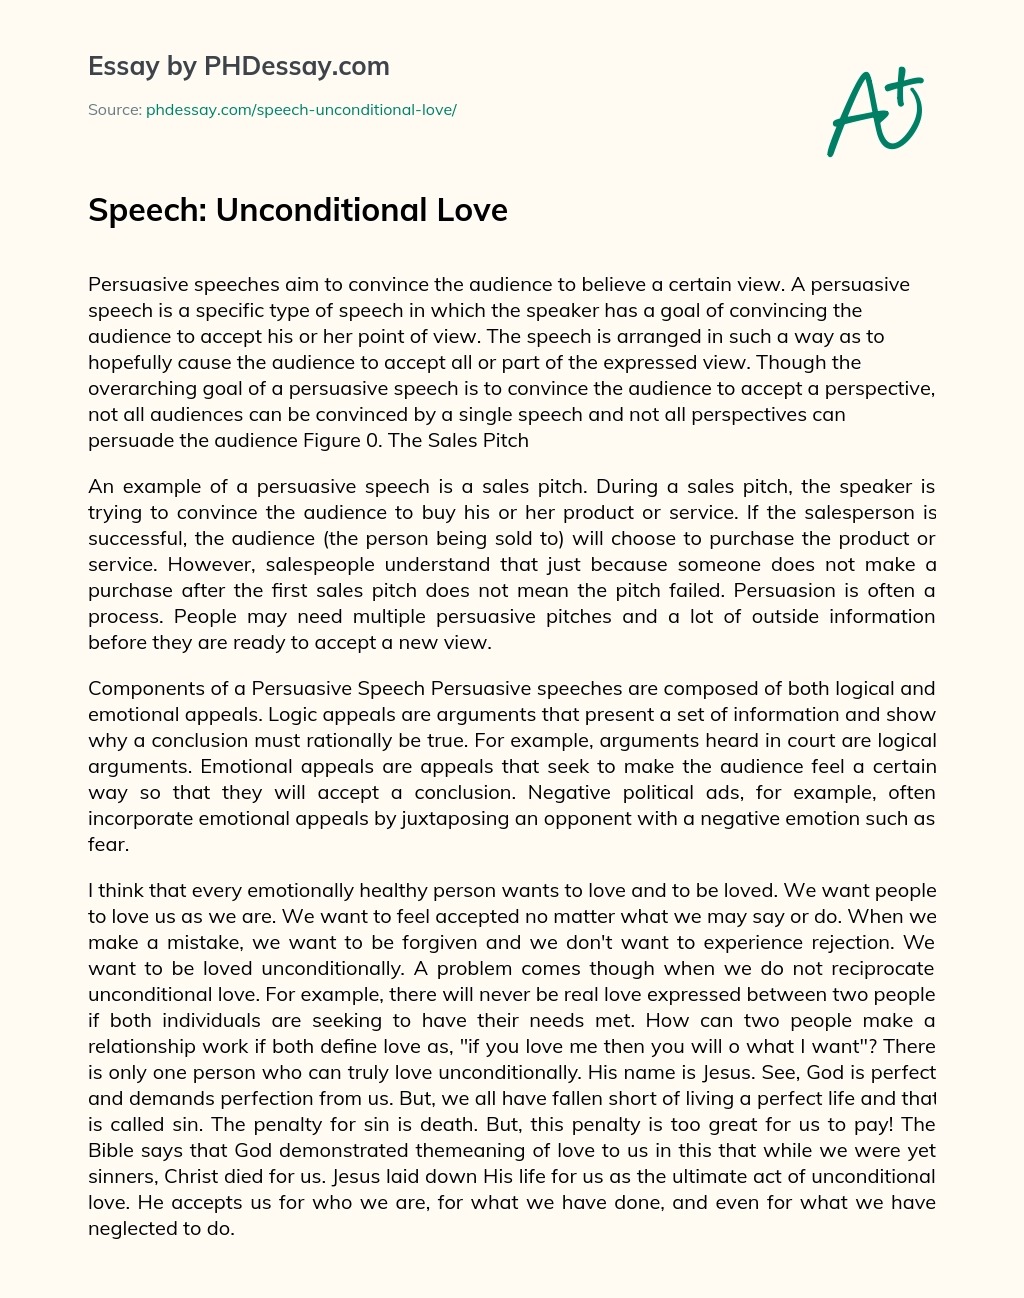 Speech: Unconditional Love essay